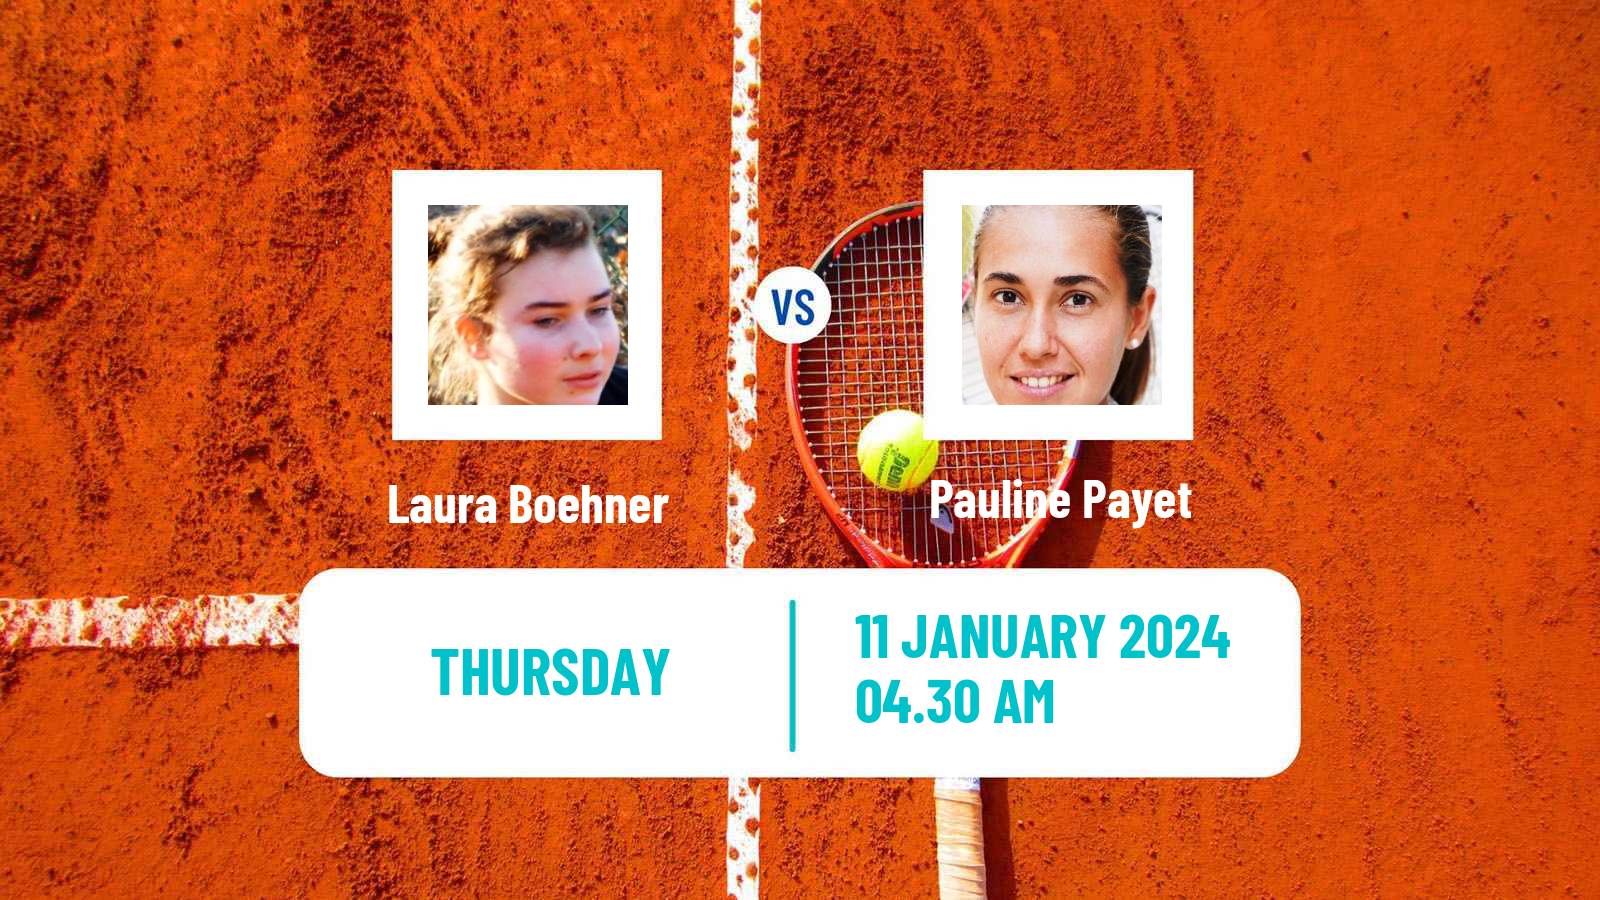 Tennis ITF W15 Fort De France Women Laura Boehner - Pauline Payet